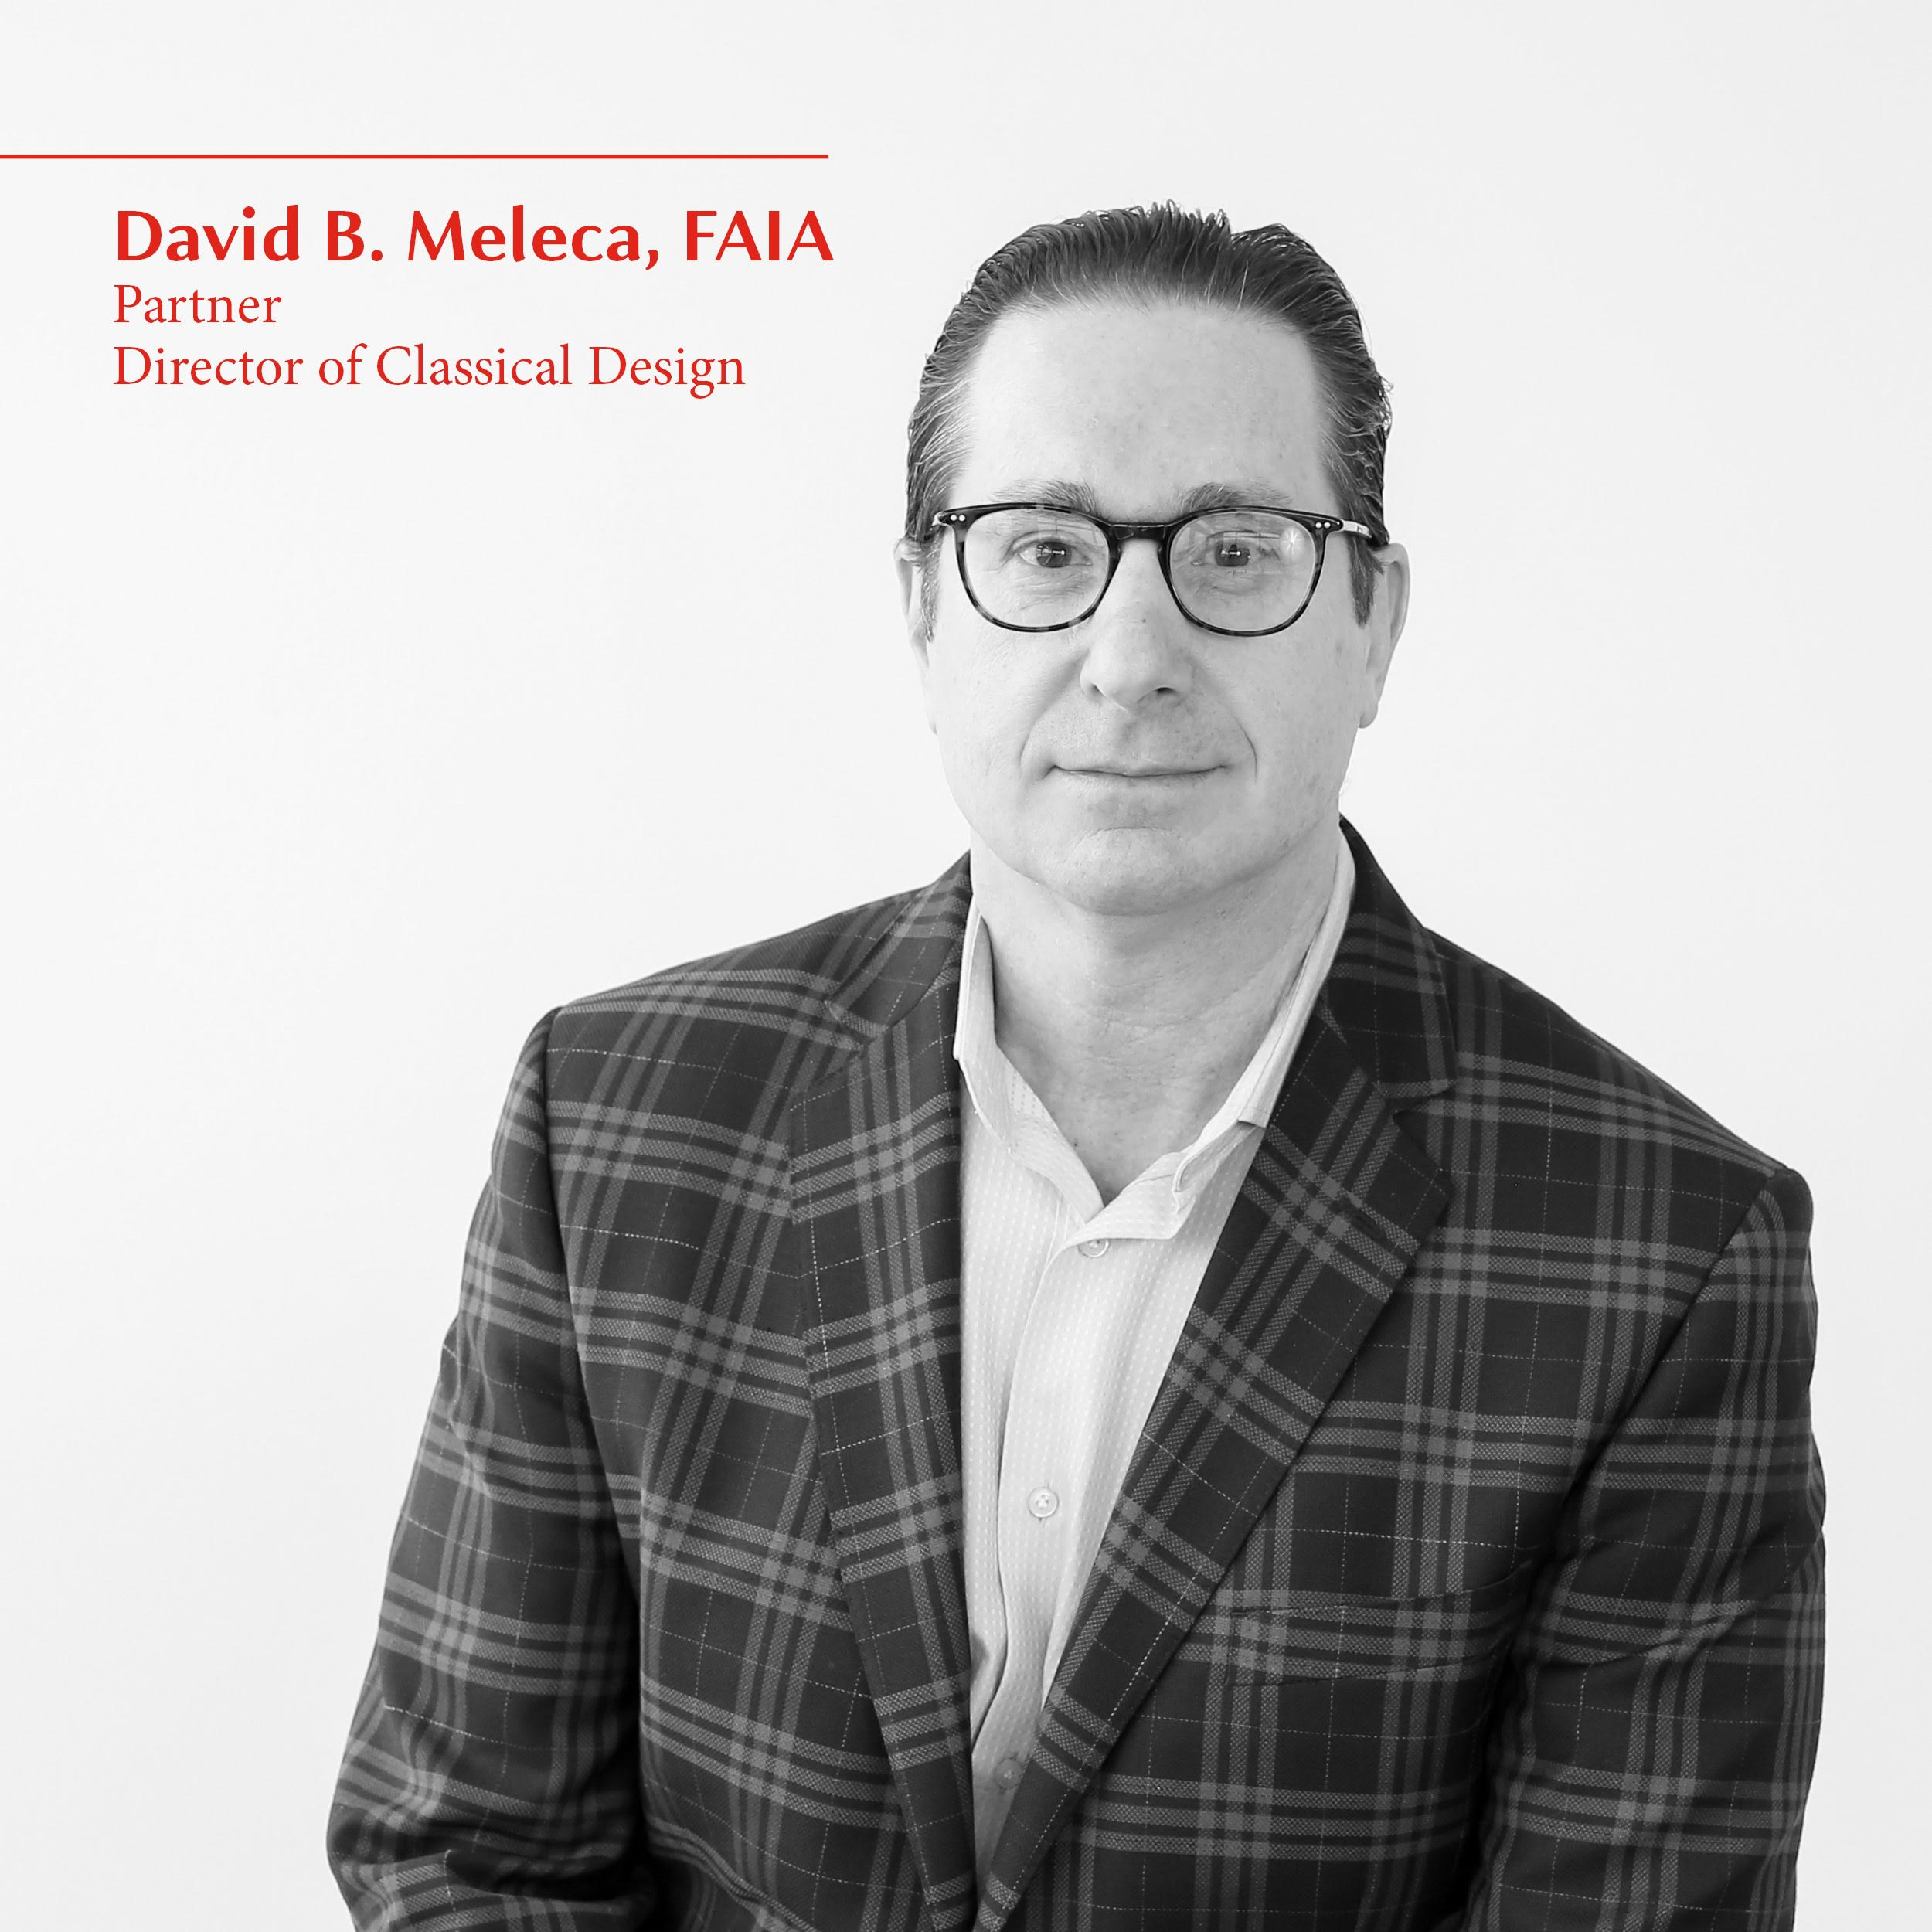 David B. Meleca